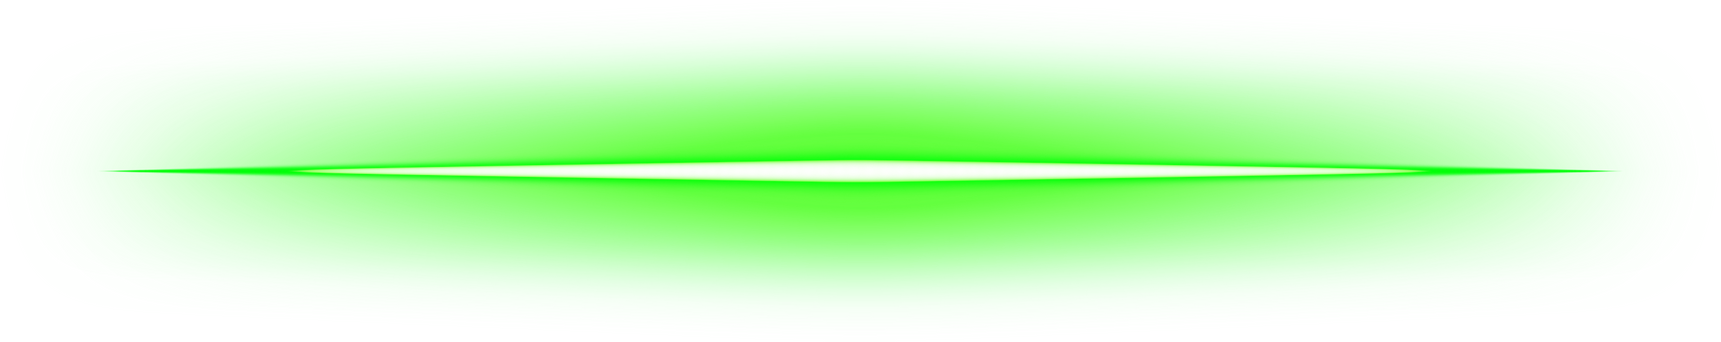 Glowing Green Neon Line